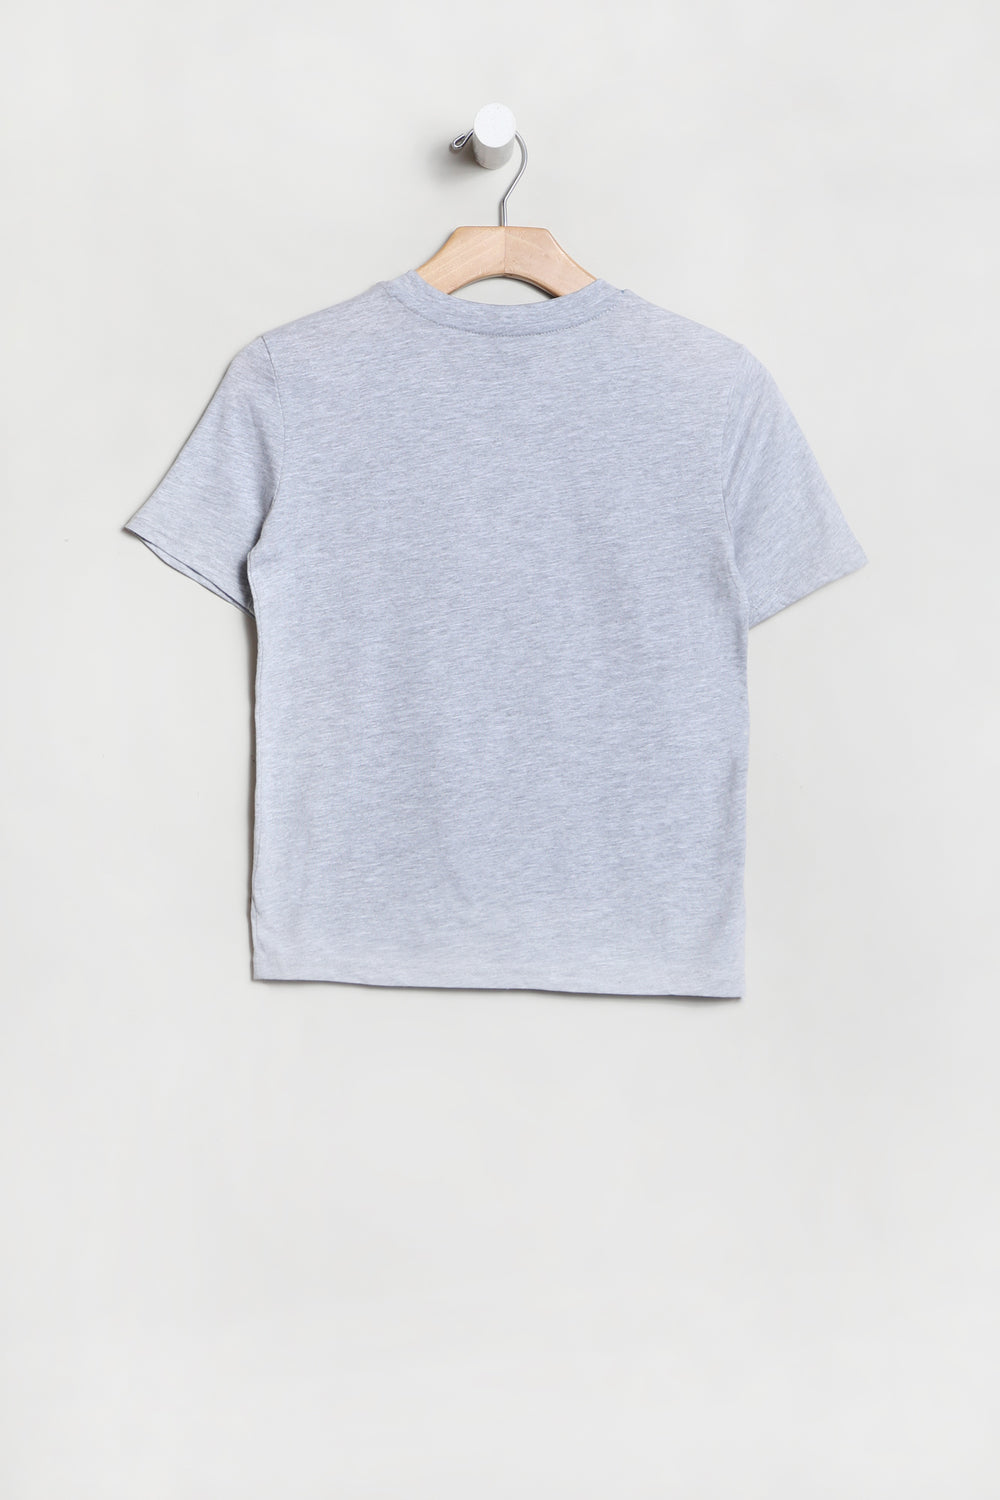 T-Shirt Imprimé Kellogg's Pop Tarts Junior T-Shirt Imprimé Kellogg's Pop Tarts Junior